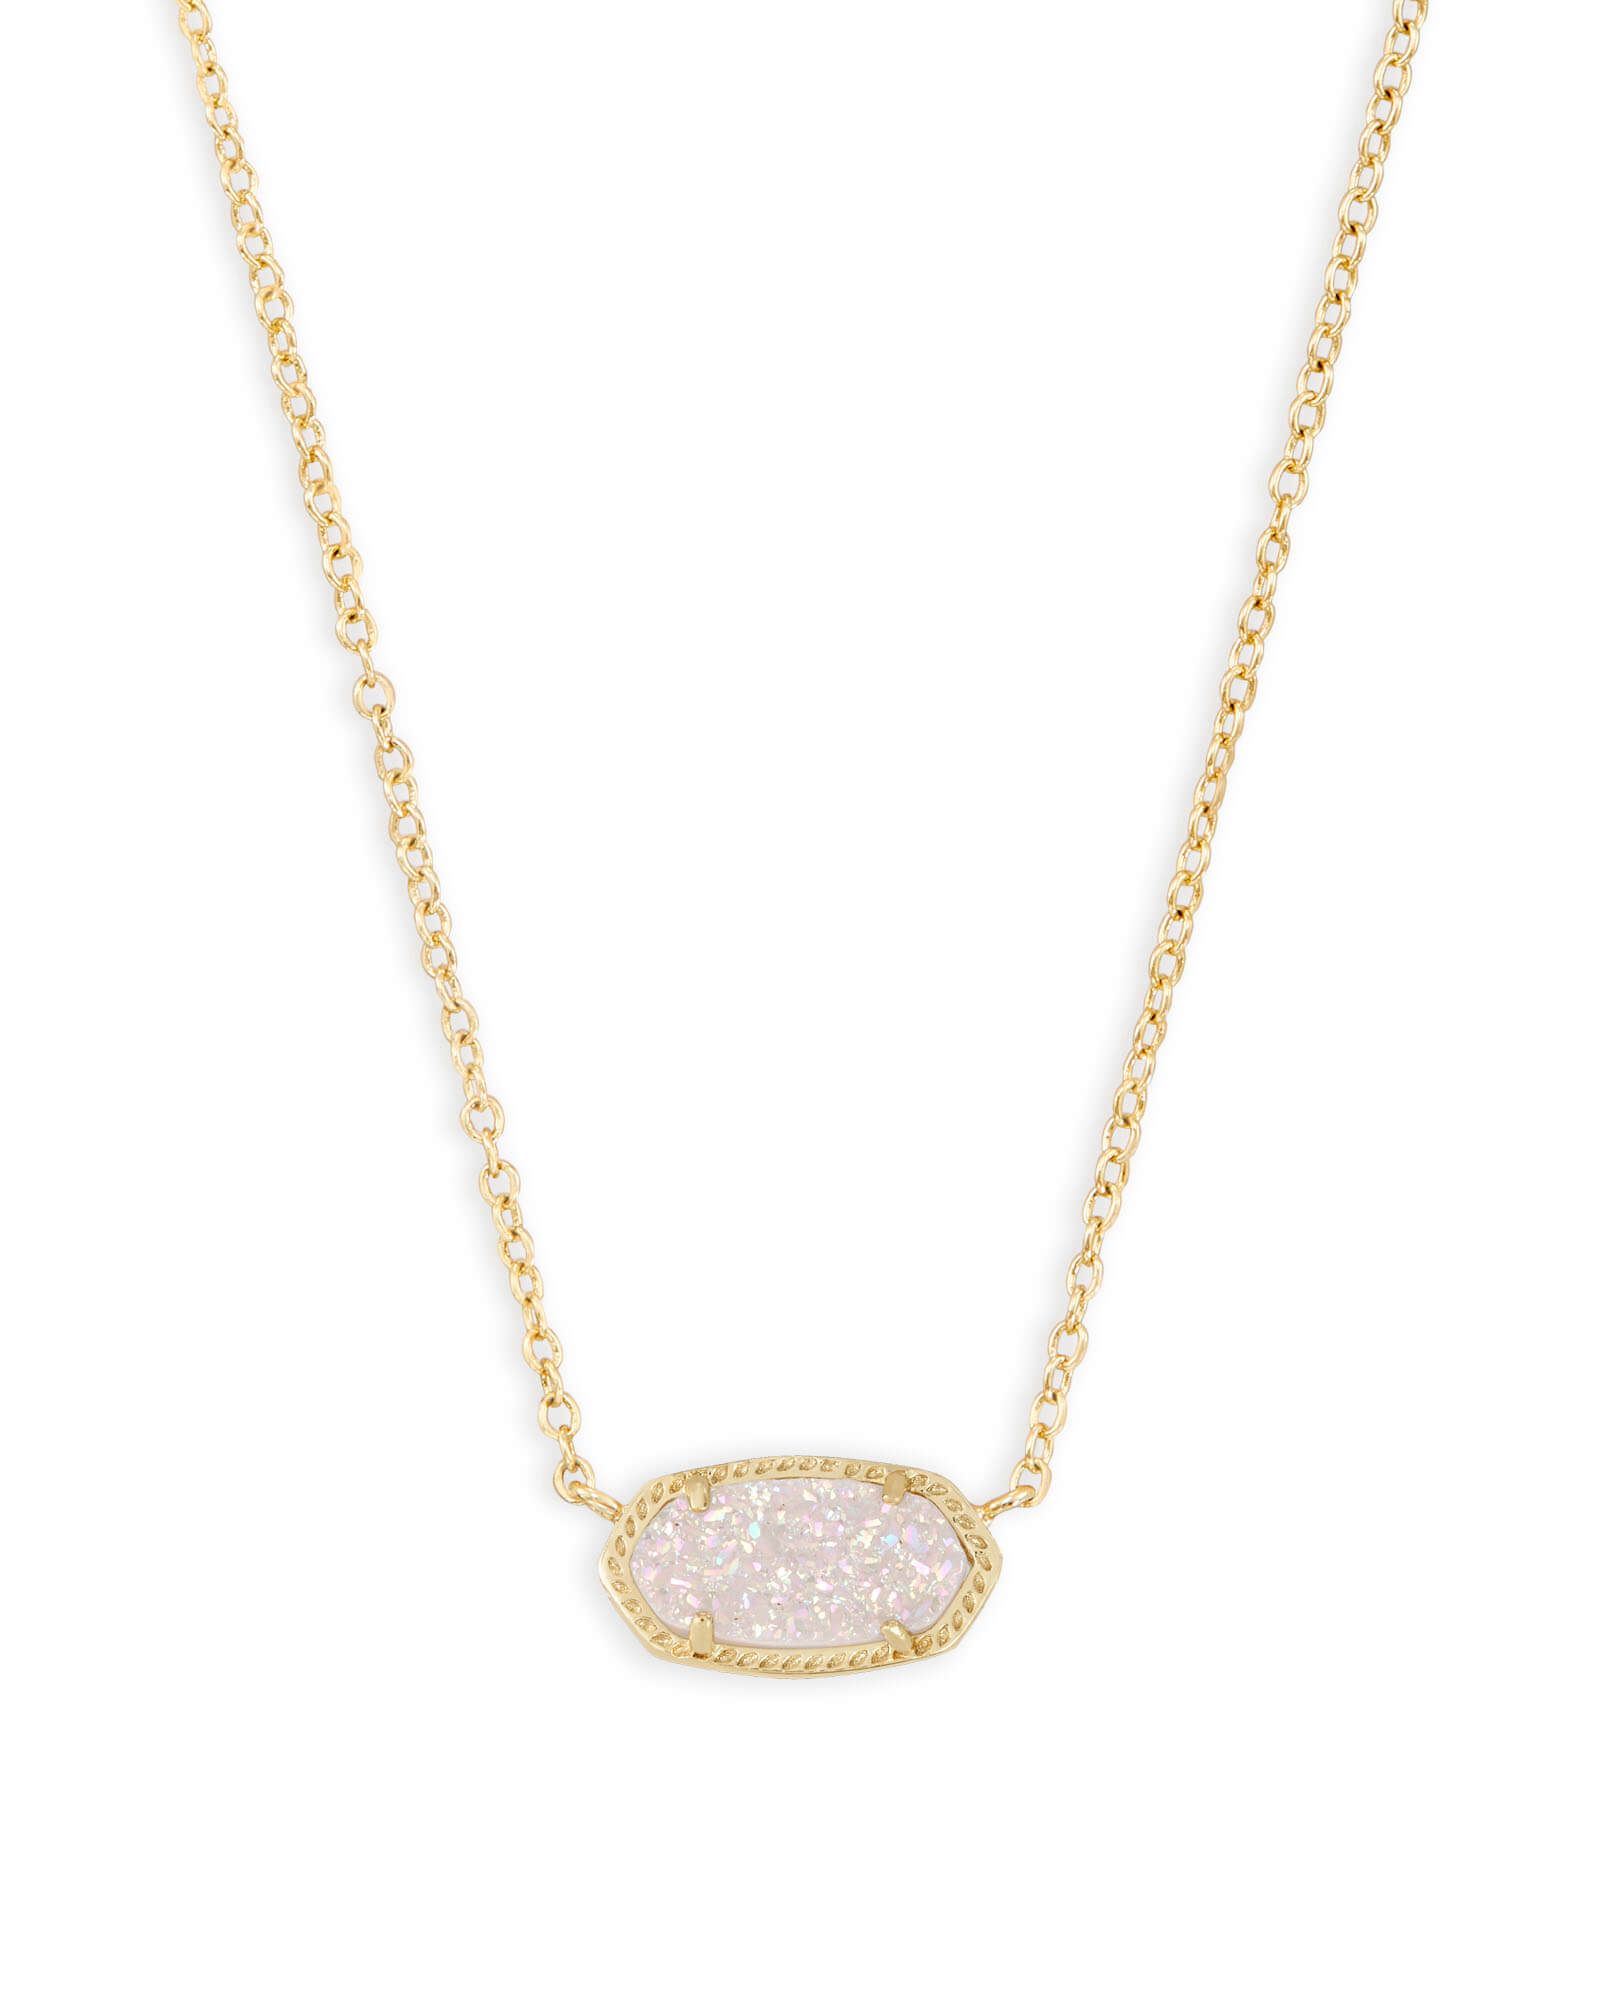 Elisa Gold Pendant Necklace in Iridescent Drusy | Kendra Scott